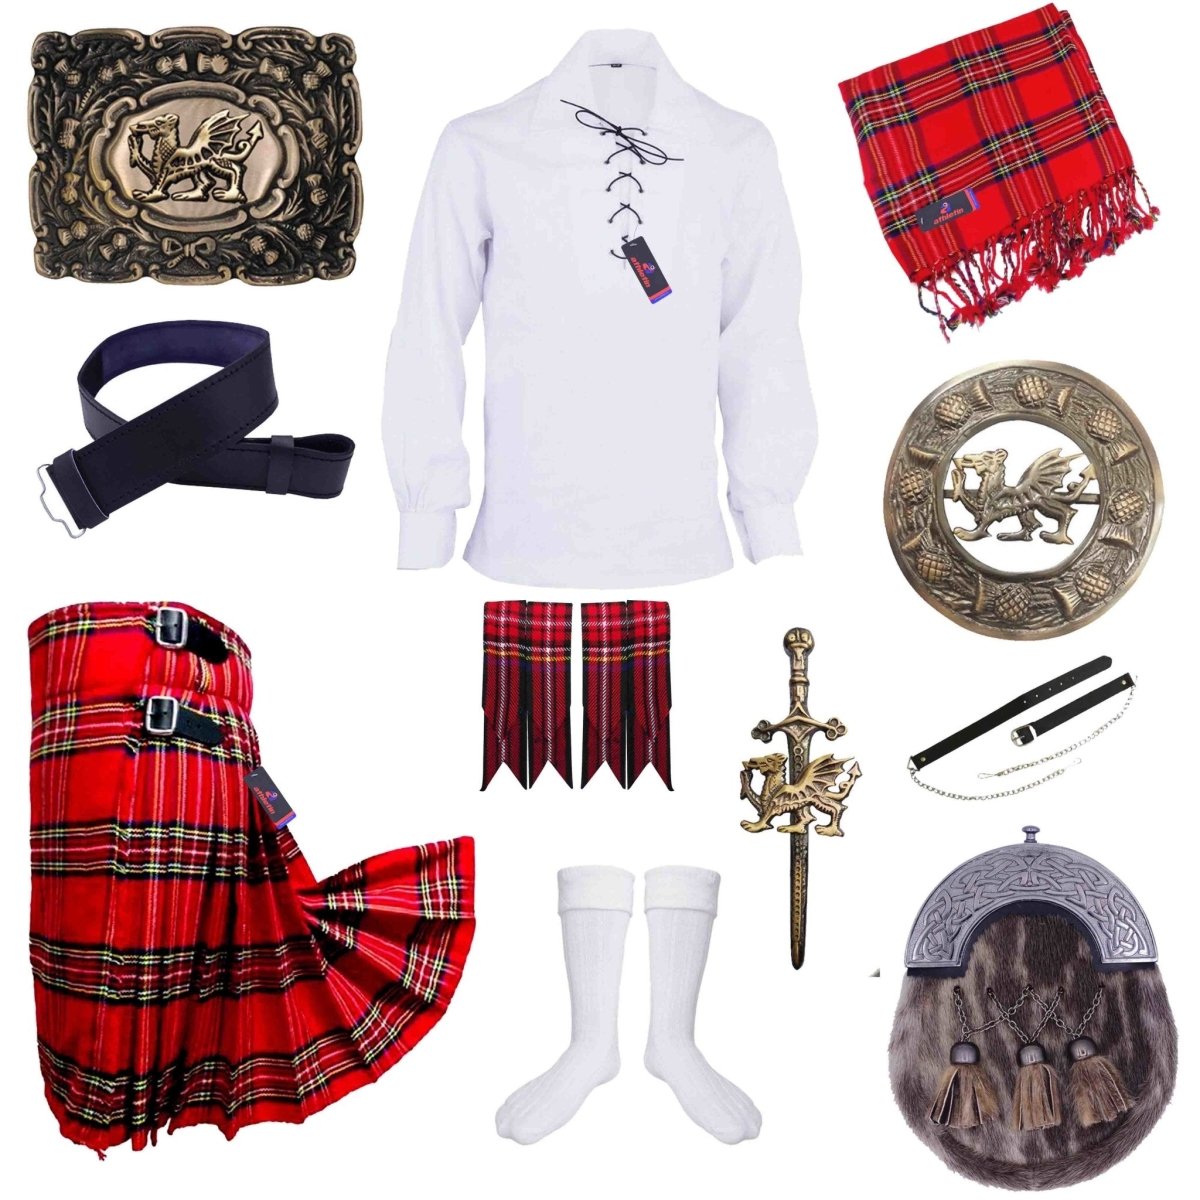 Royal Stewart Highland Kilt Outfit